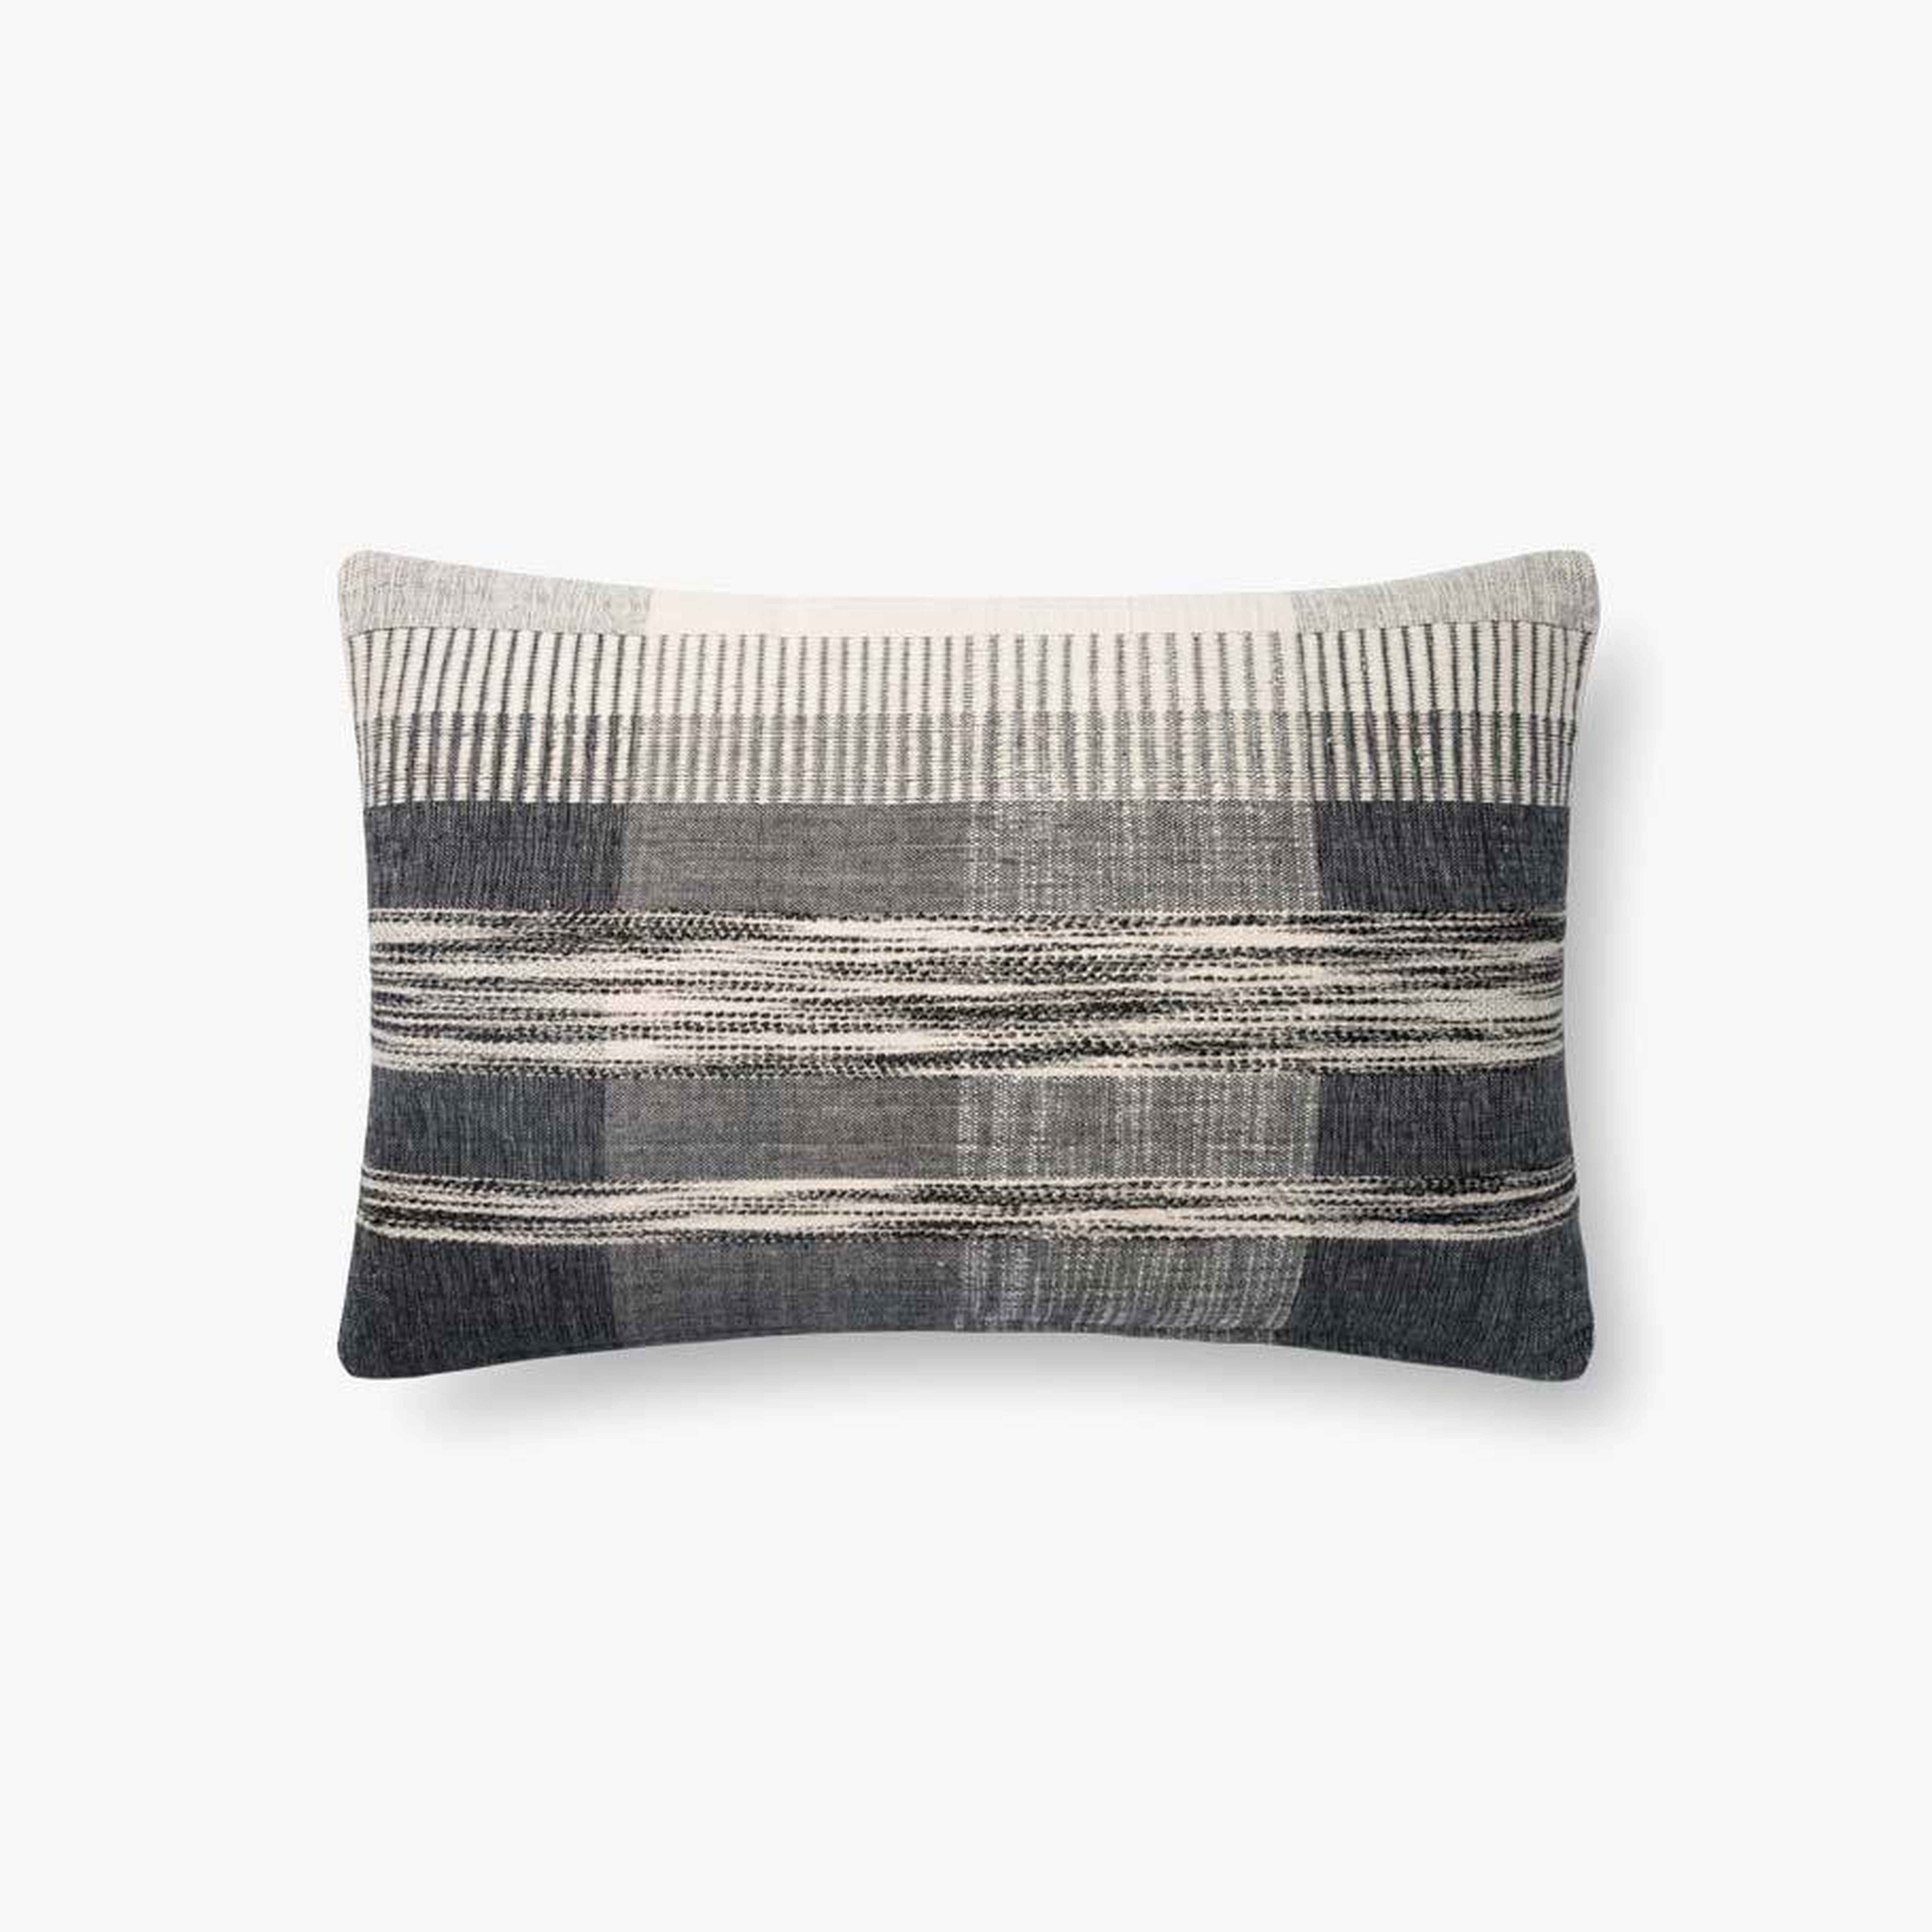 Abstract Plaid Lumbar Pillow, Gray & White, 21" x 13" - Loloi Rugs